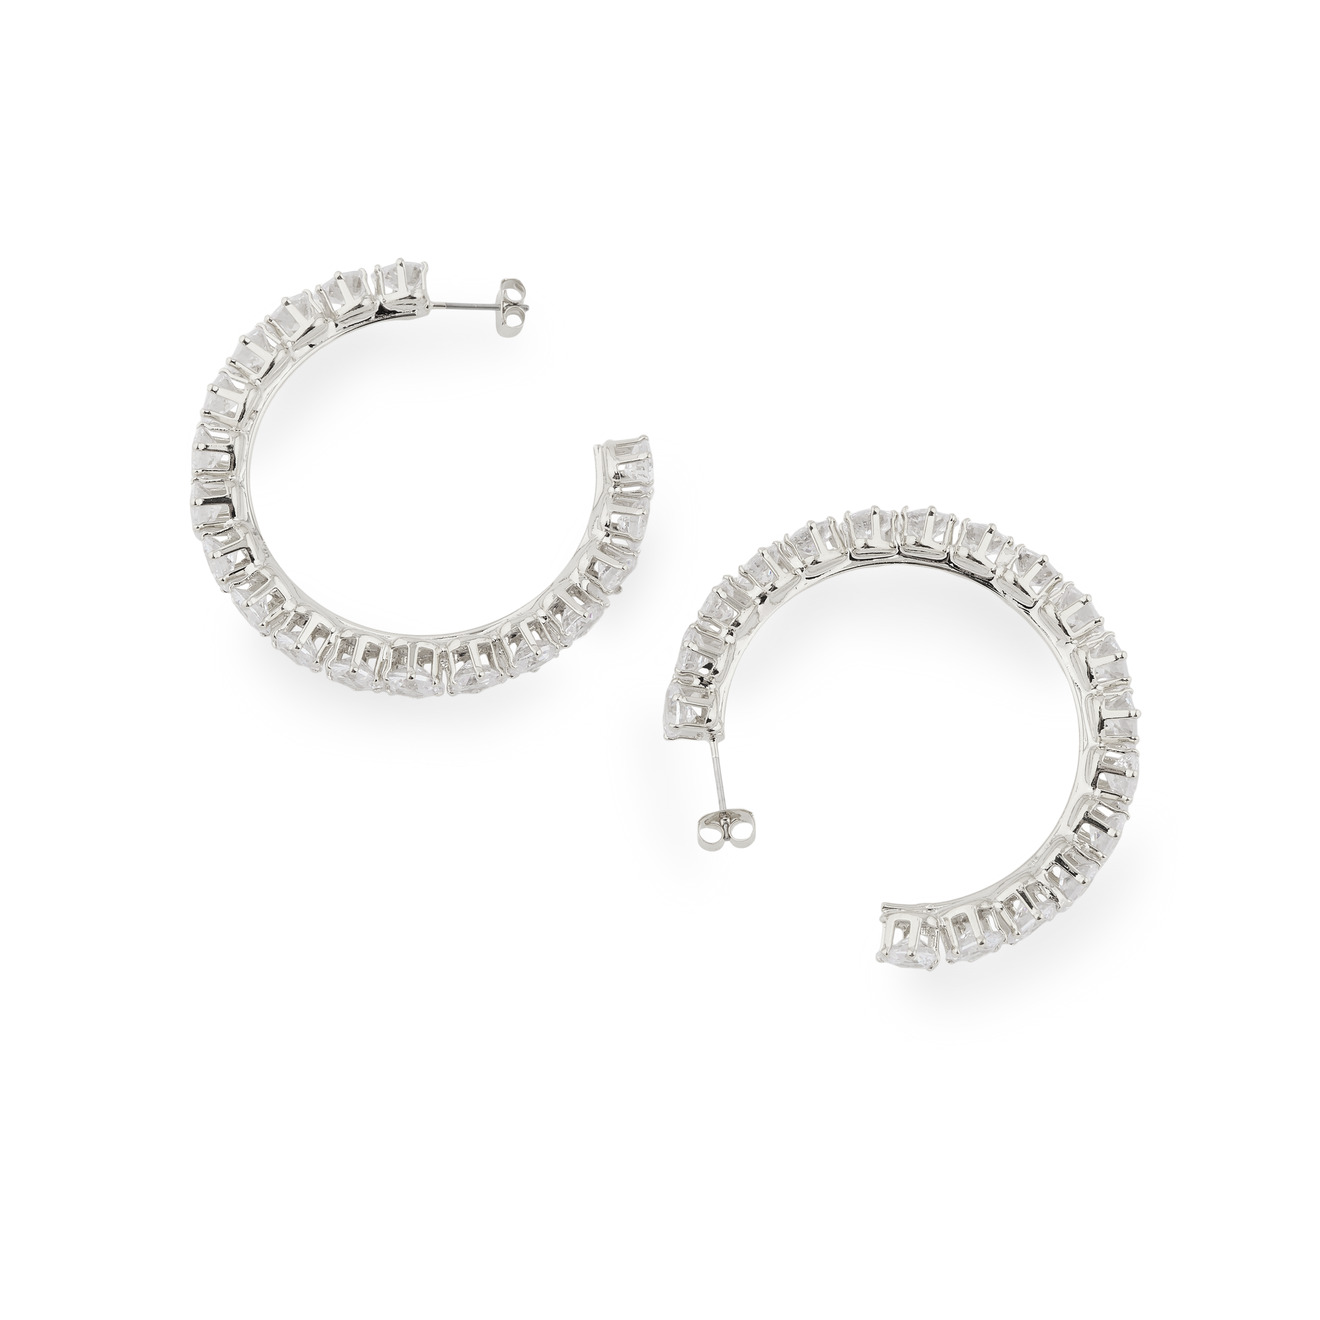 Herald Percy Серебристые серьги-кольца с кристаллами herald percy серебристые фактурные серьги кольца с кристаллами